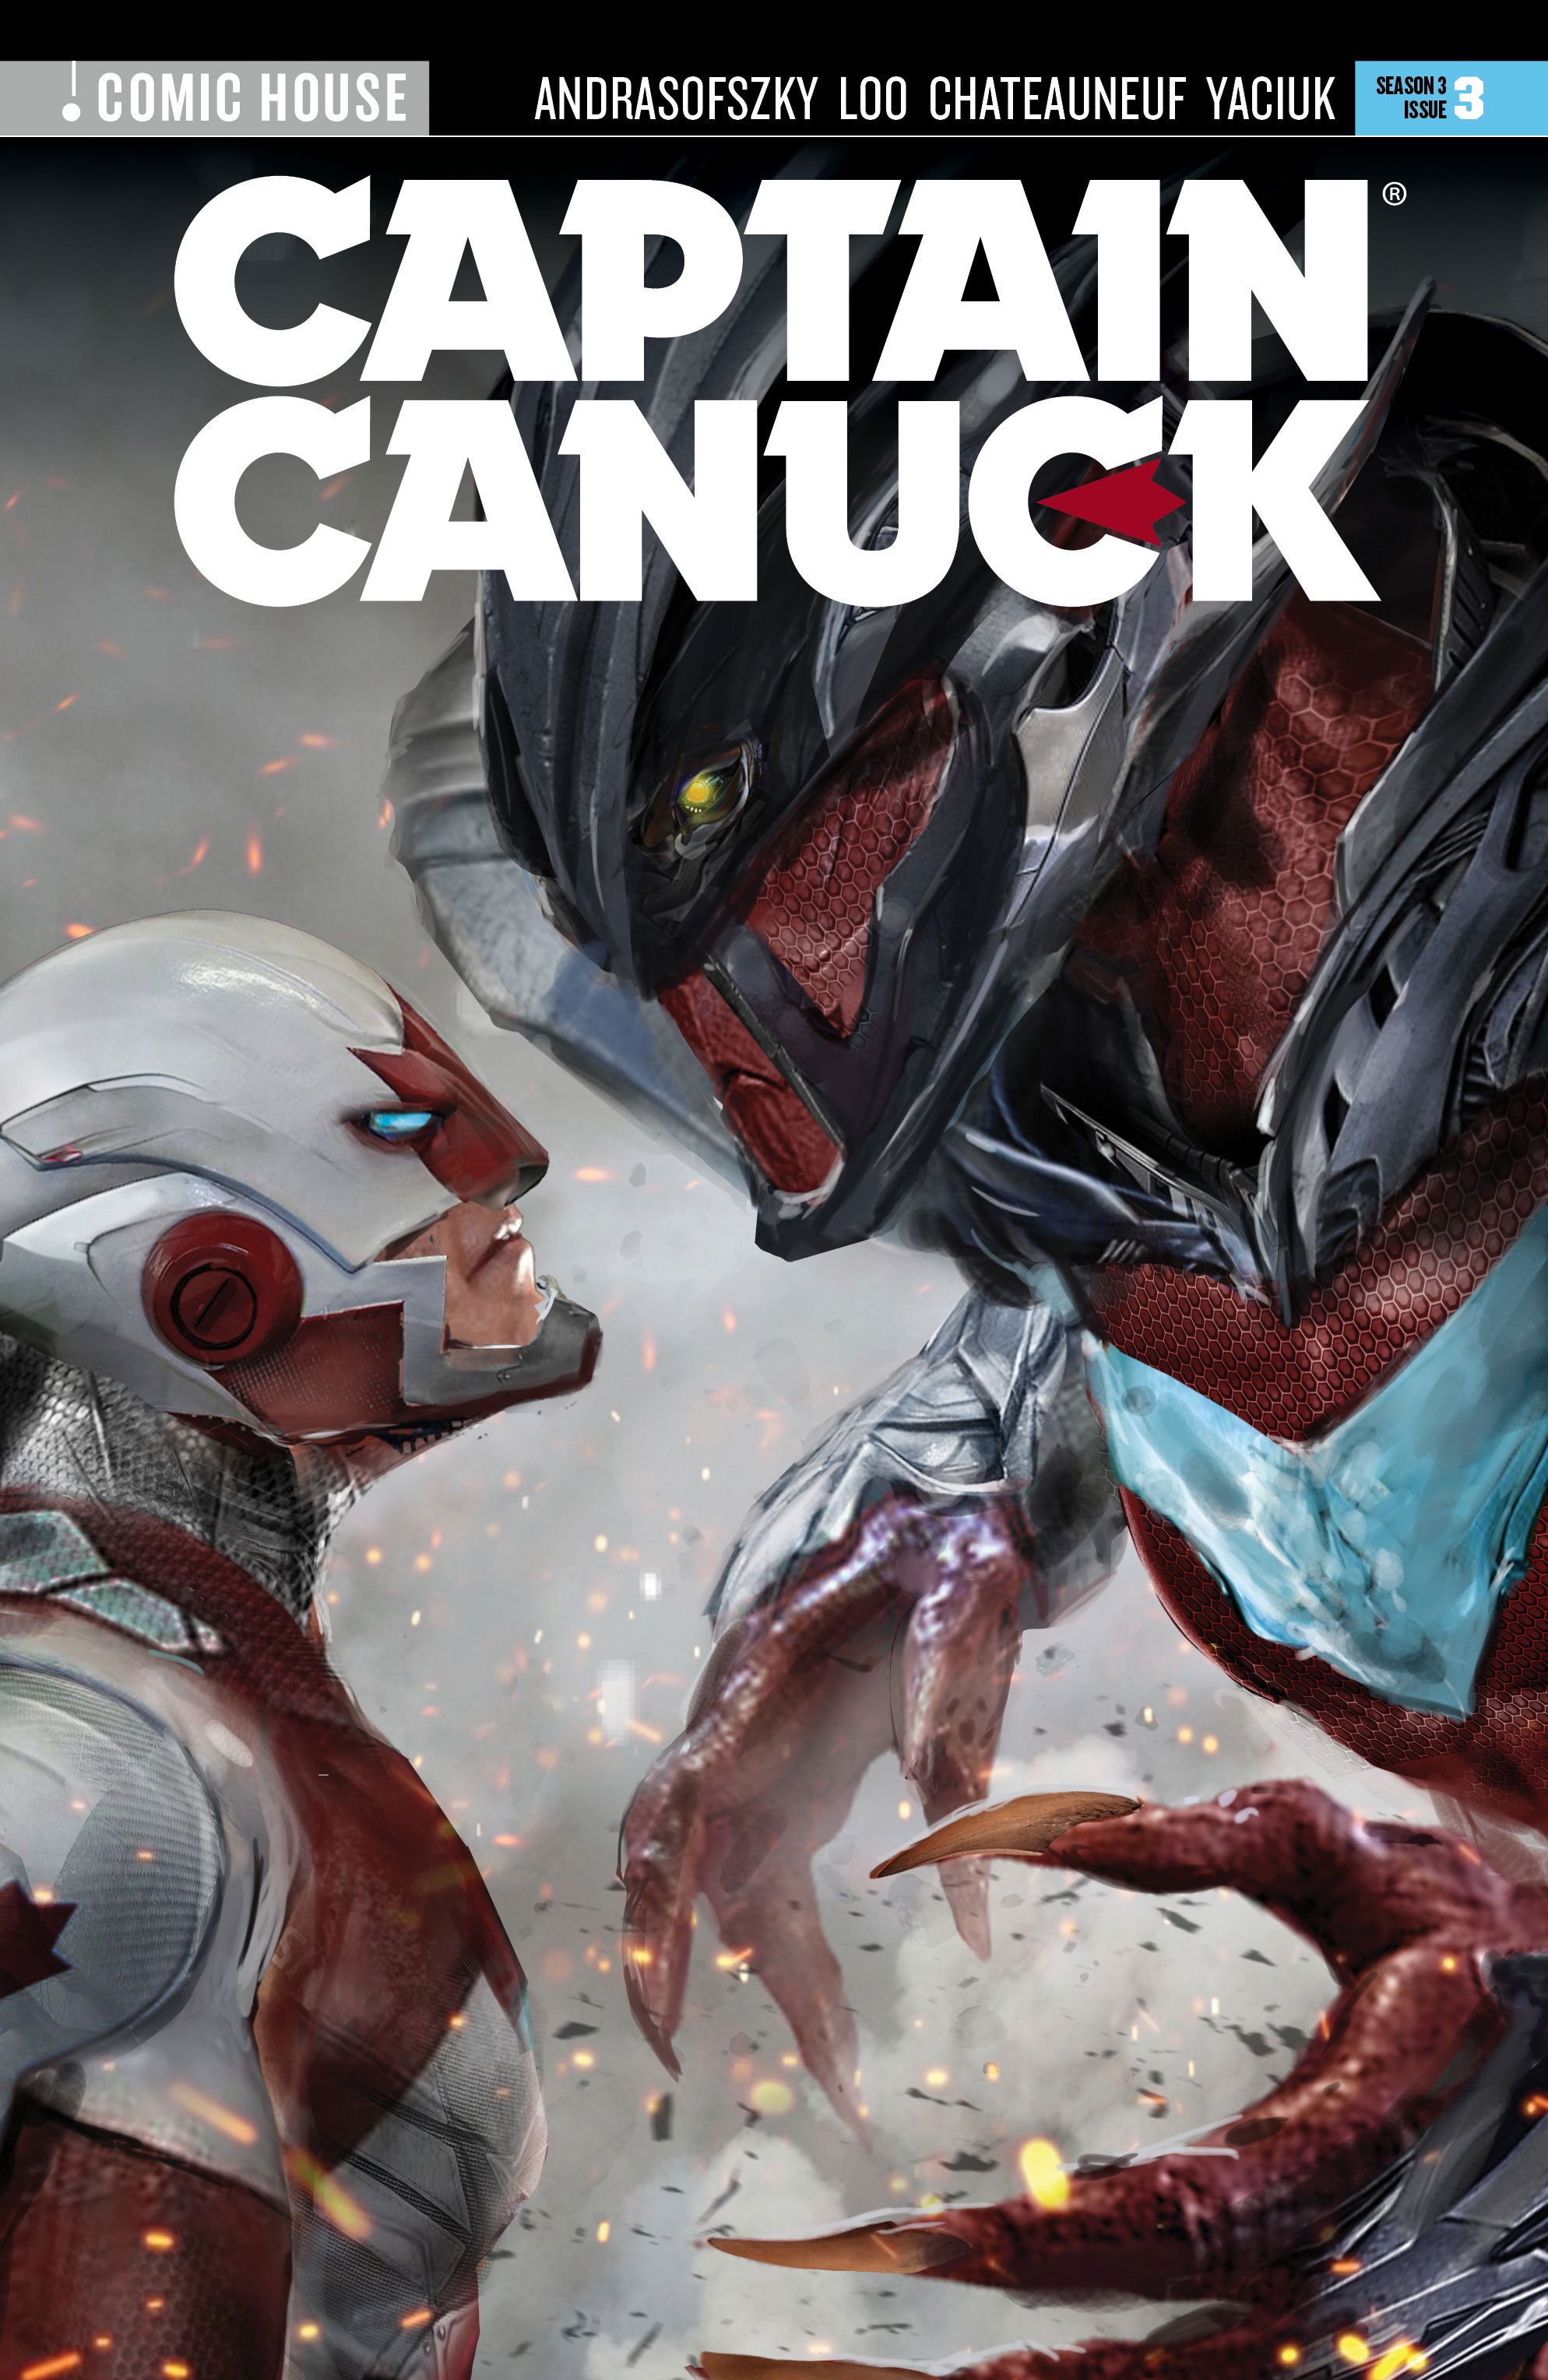 CaptainCanuck_014_S3_issue3_cover-A.jpg